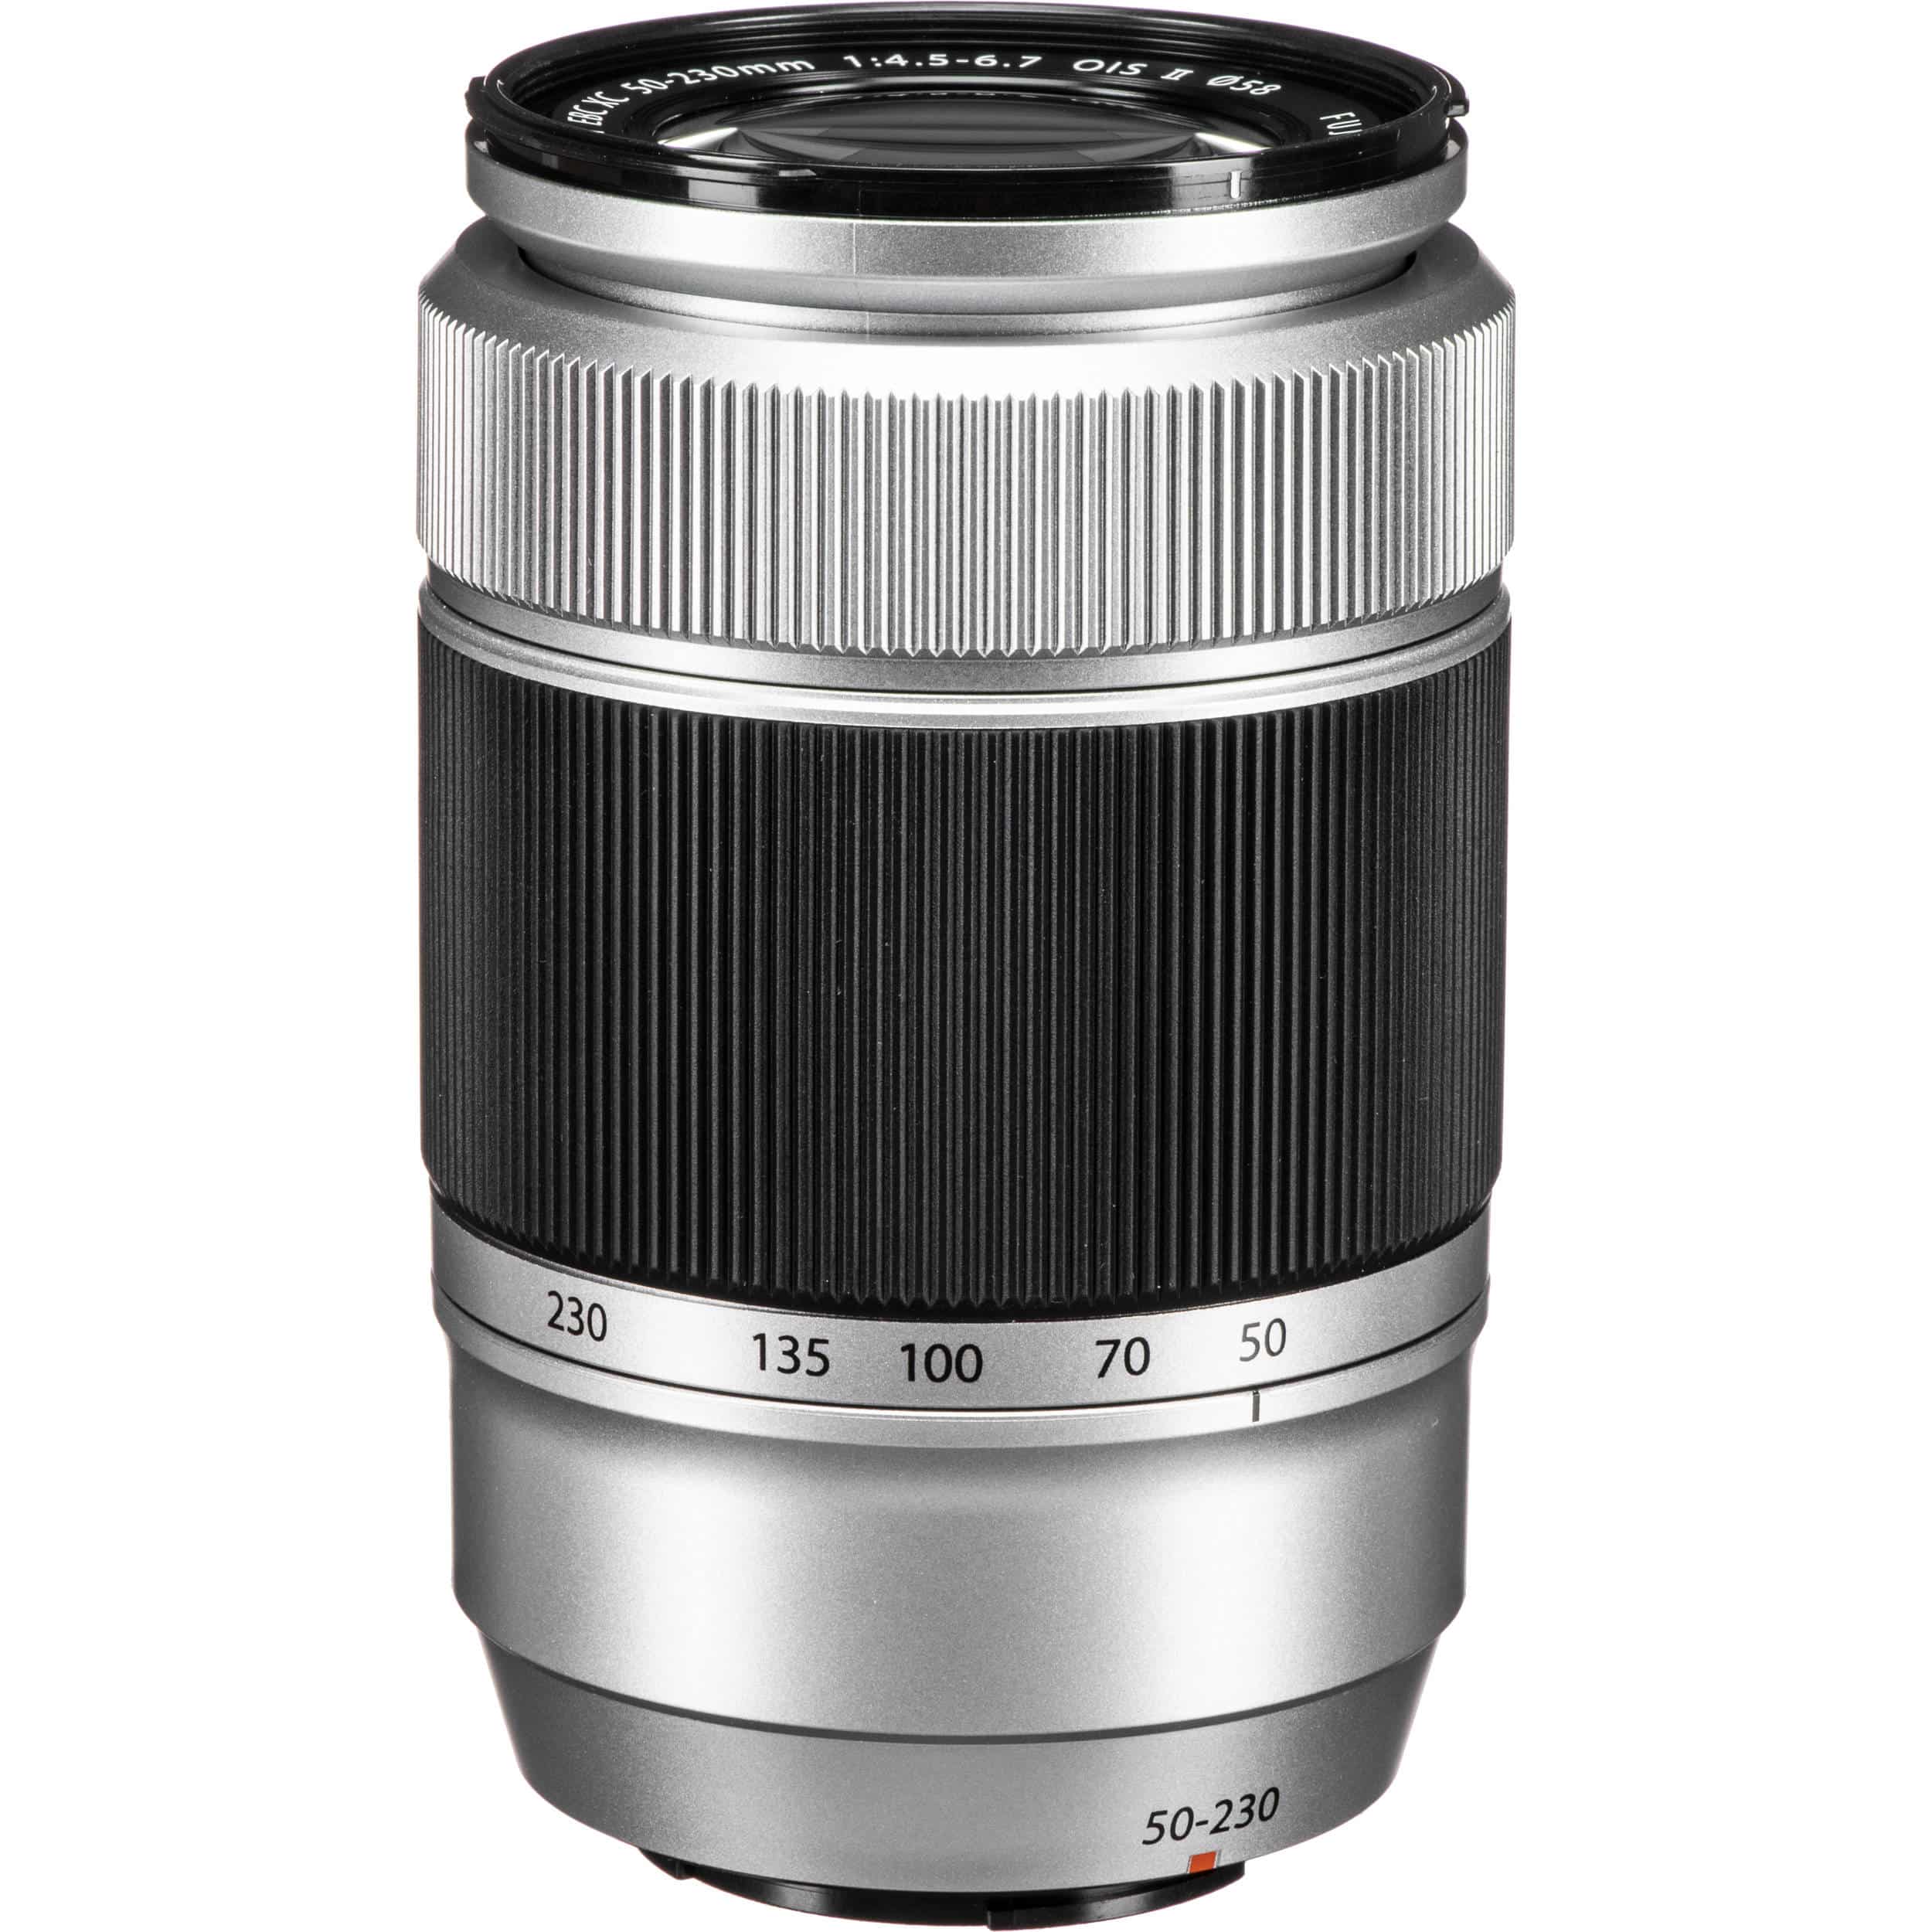 Ống kính Fujifilm XC 50-230mm F4.5-6.7 OIS II (Black)